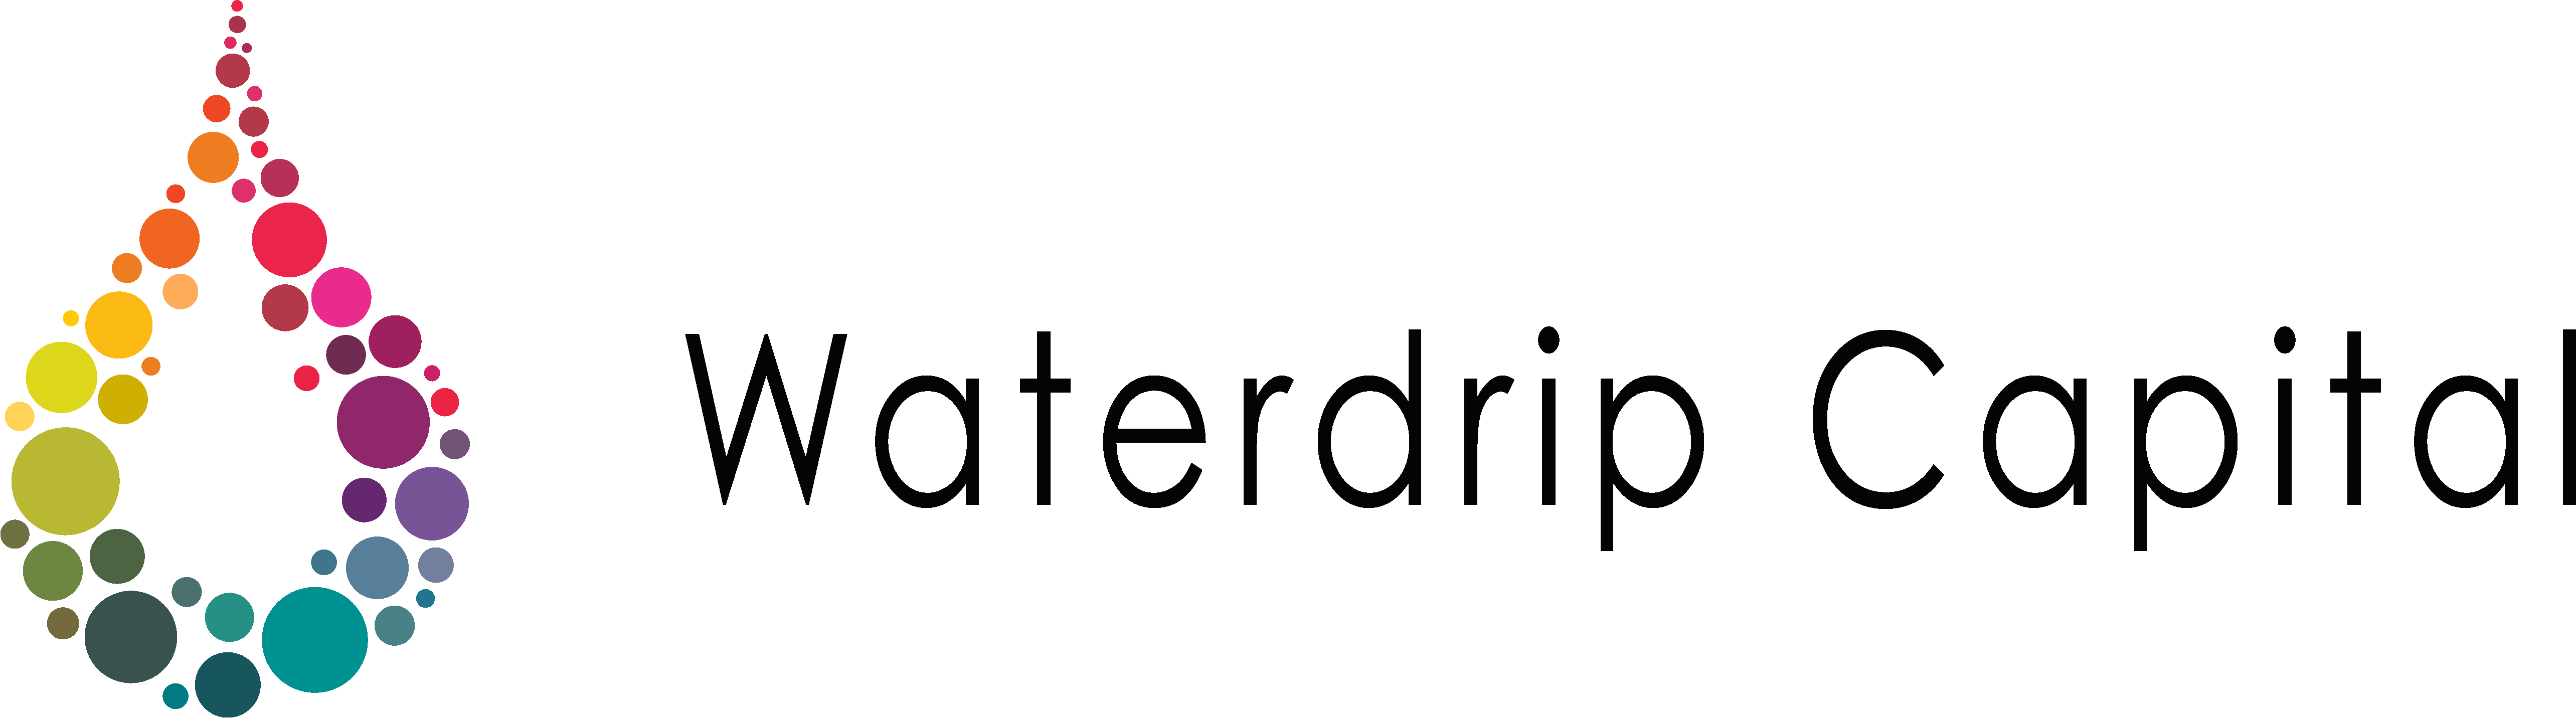 Waterdrip Capital